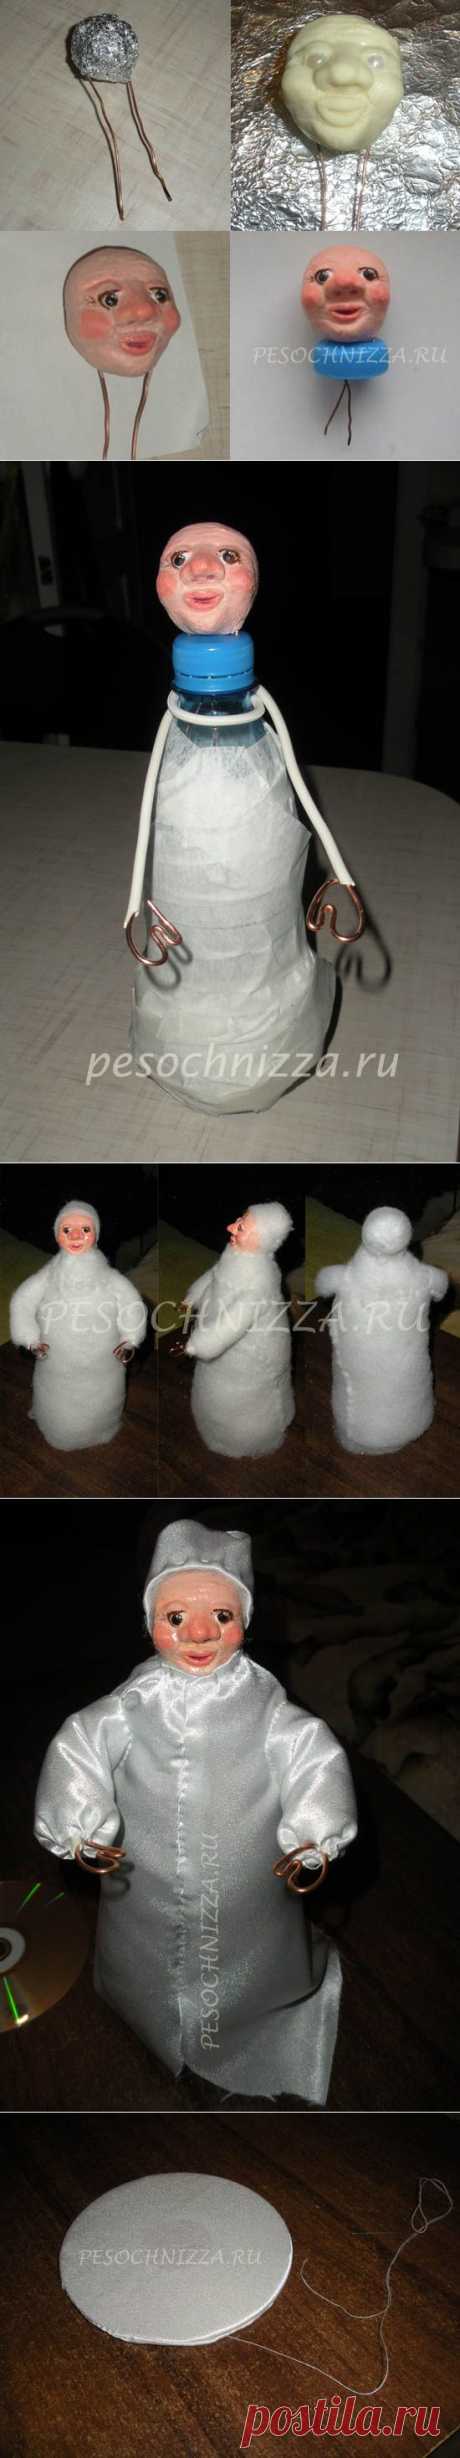 Дед Мороз своими руками из ваты и соленого теста МК | pesochnizza.ru